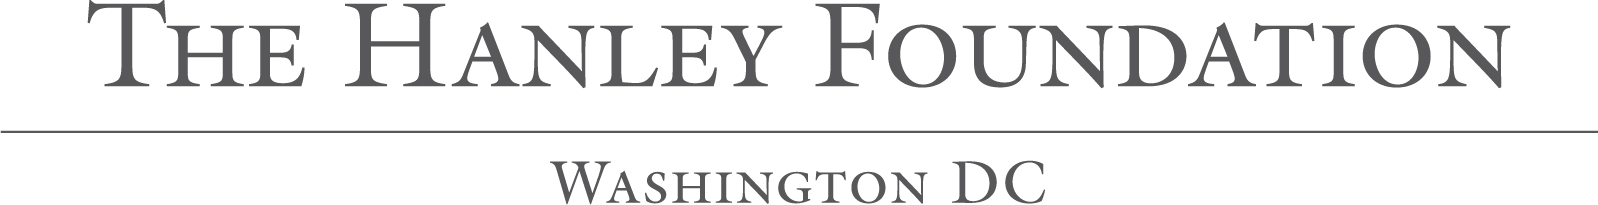 The Hanley Foundation Washington D.C.